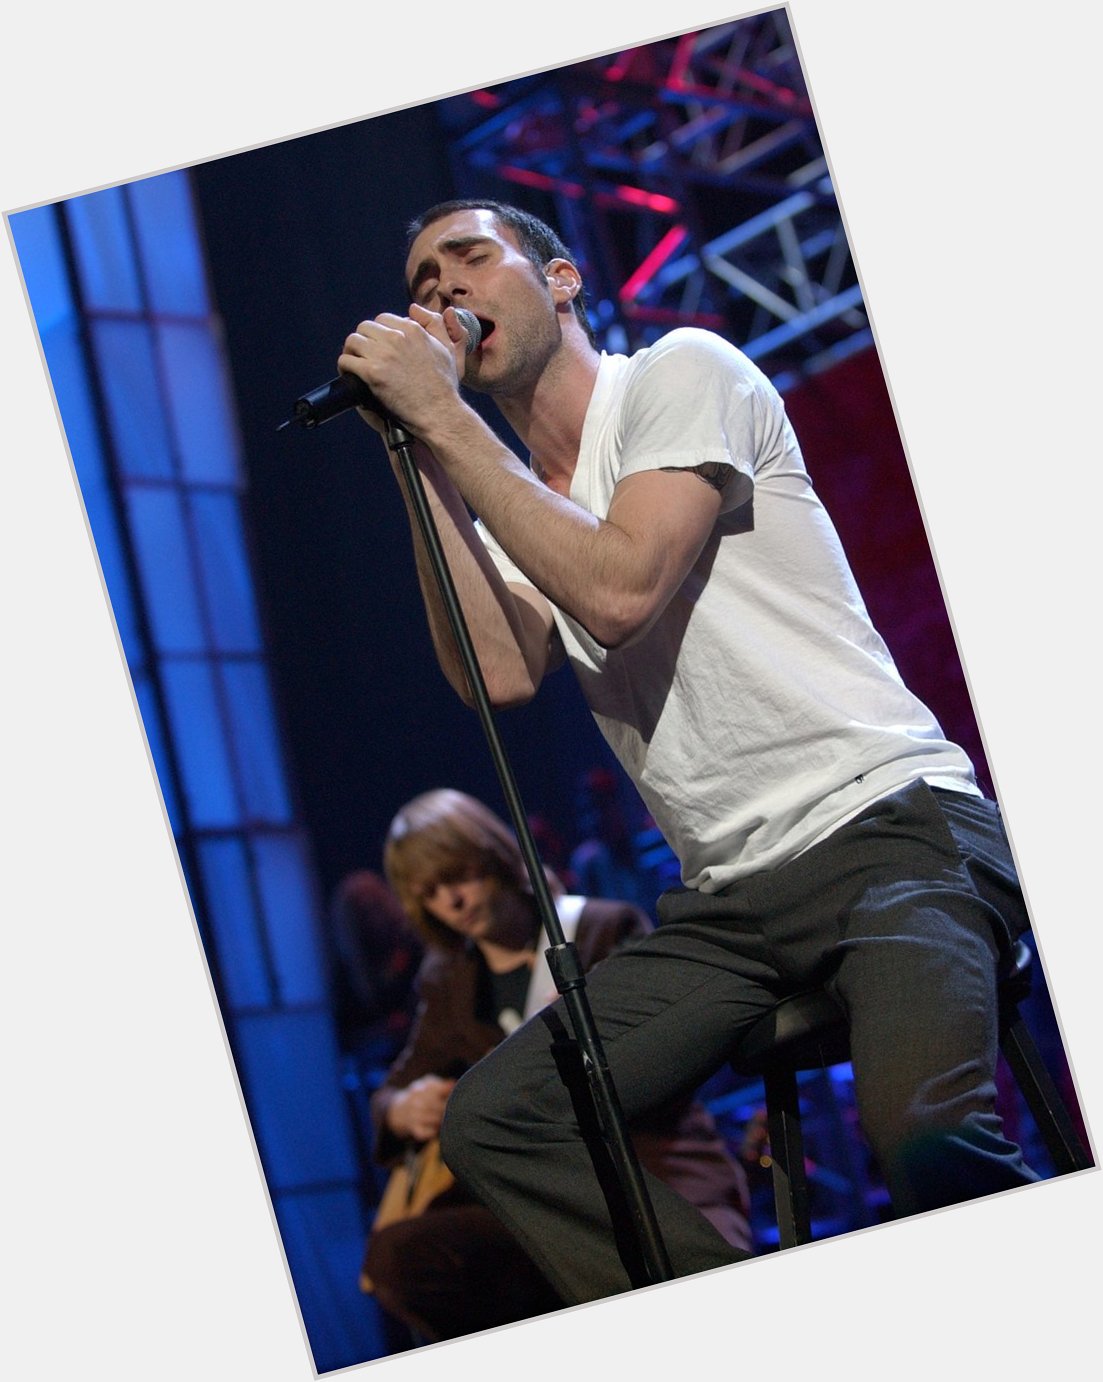 Huge - HUGE - happy birthday shoutout to Maroon 5 singer Adam Levine! (Reuters) 